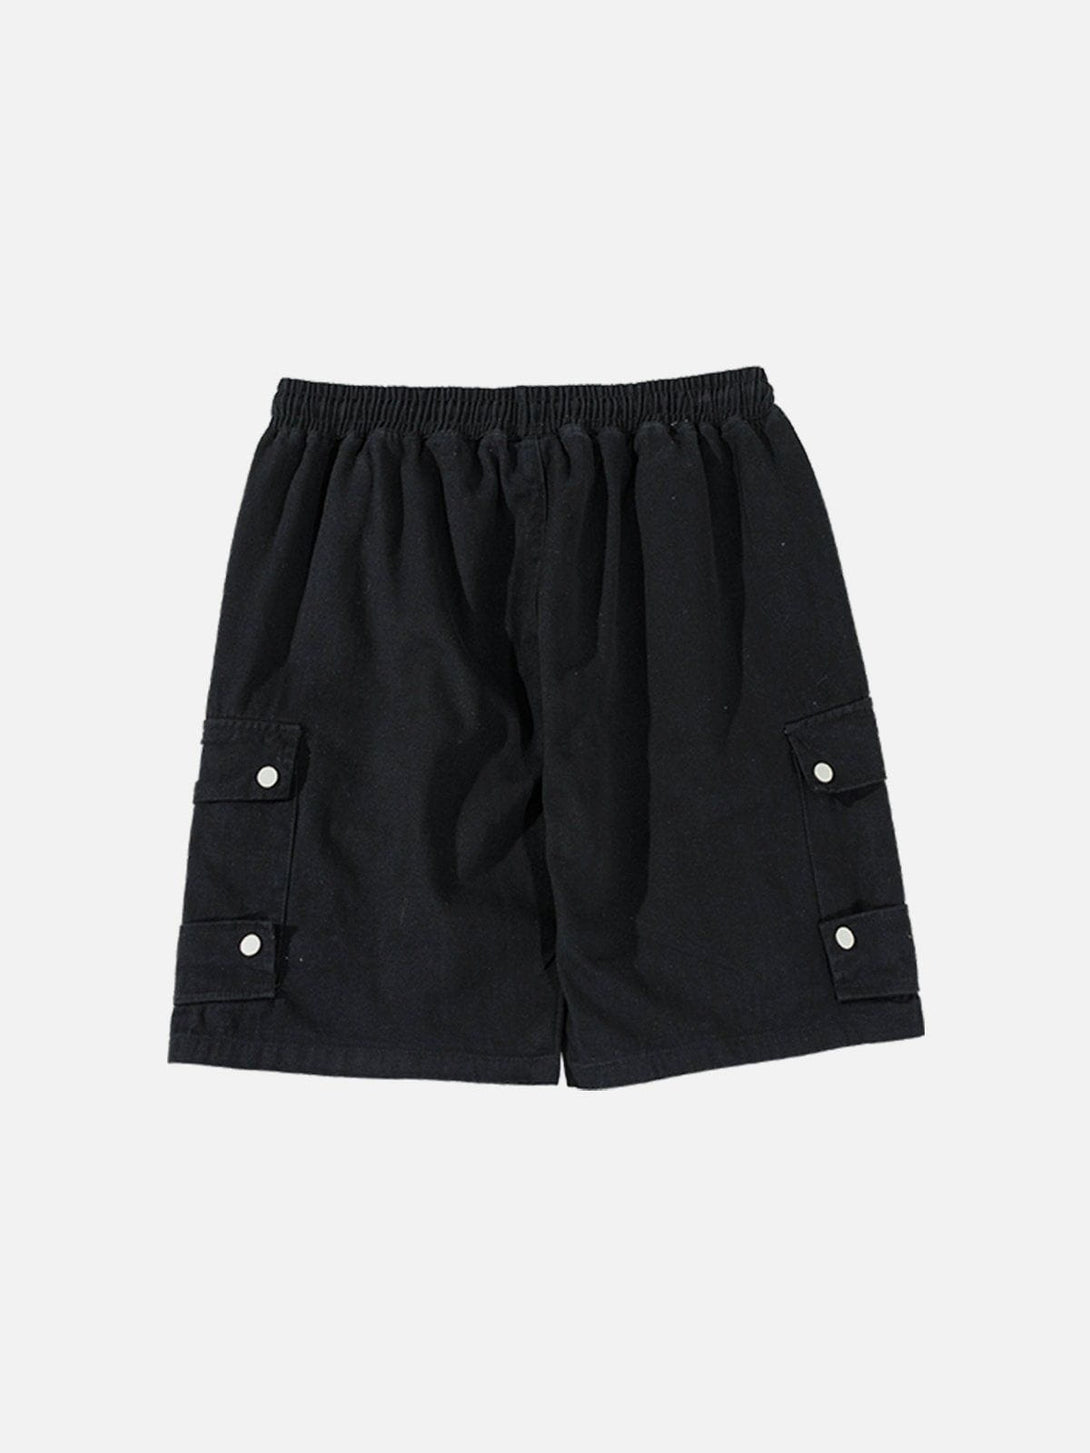 Majesda® - Discreet Side Pockets Shorts outfit ideas streetwear fashion